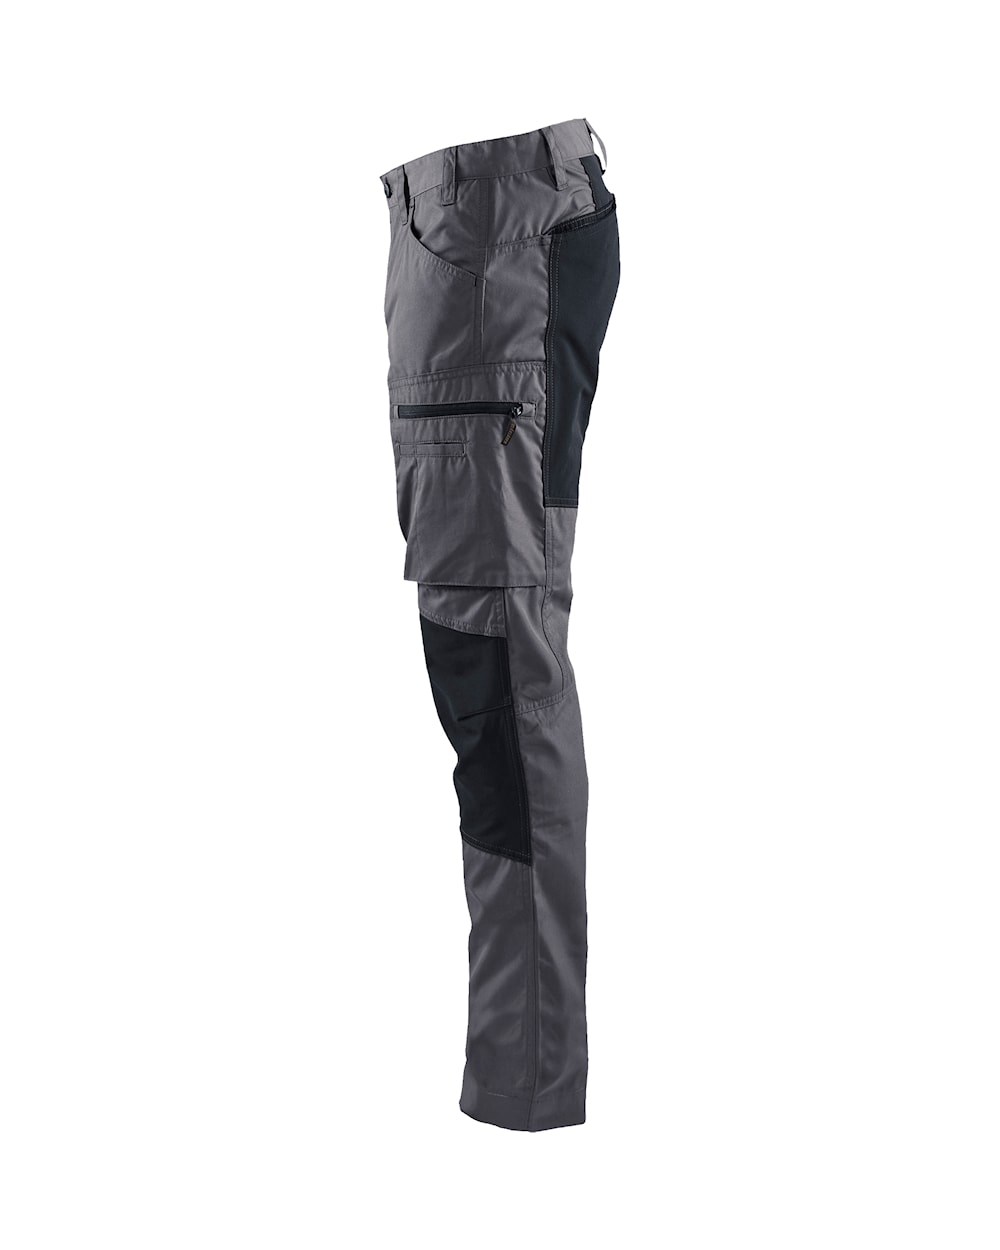 Blaklader 1655 5oz Service Pants with Stretch - 9699 Grey/Black